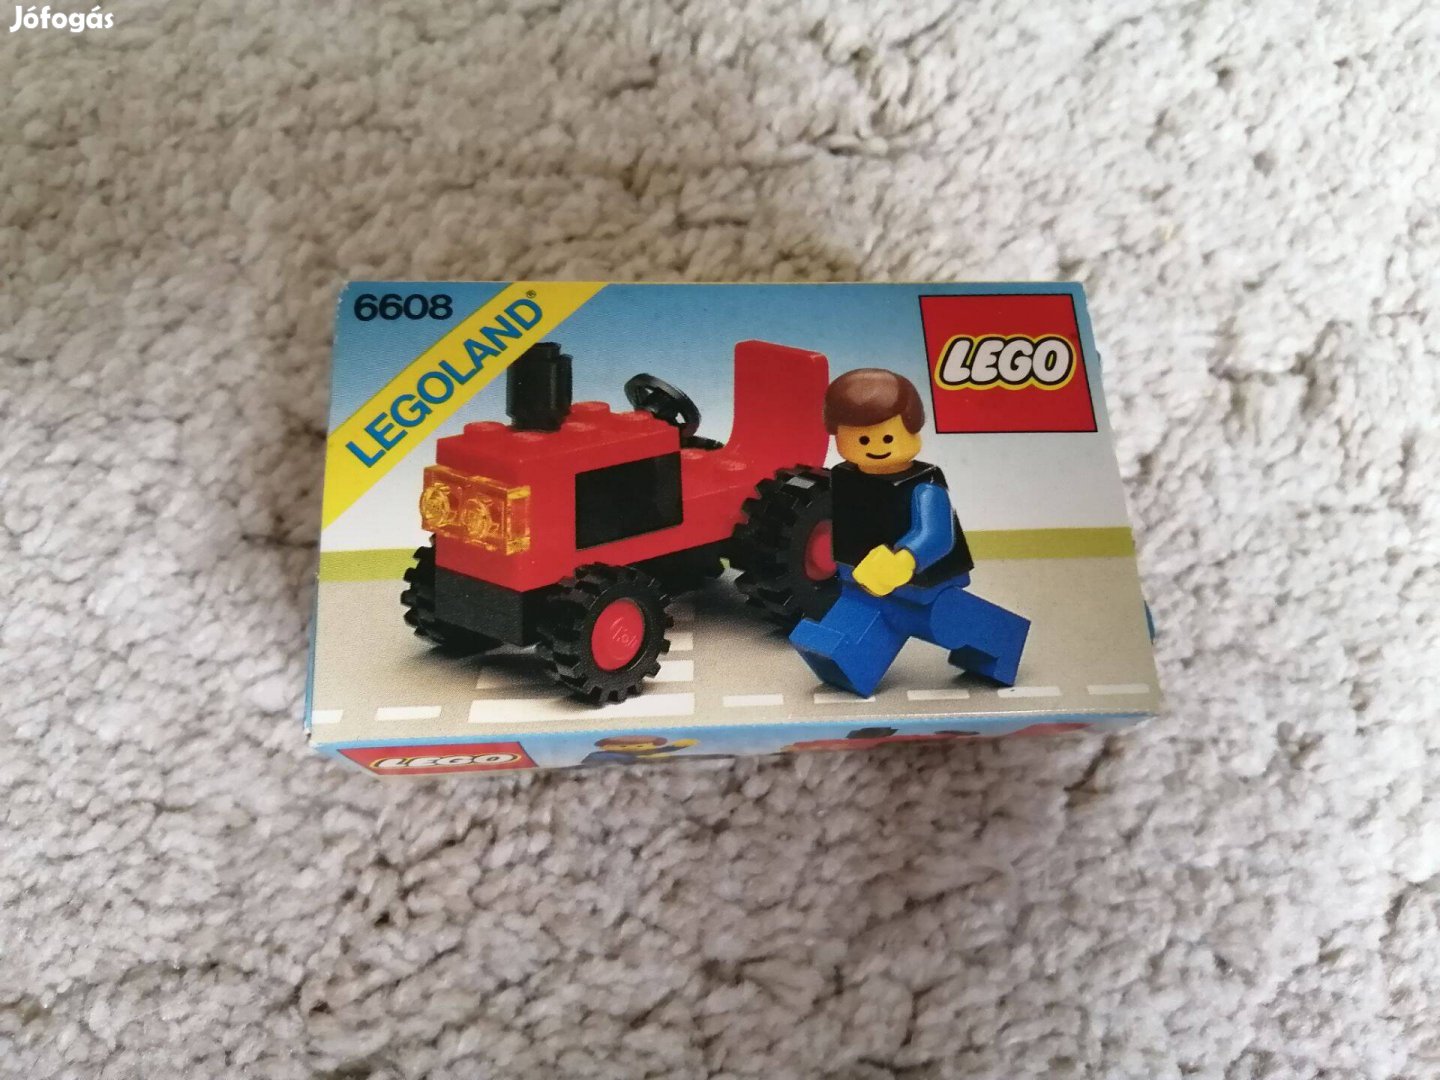 LEGO 6608 tarktor classic town